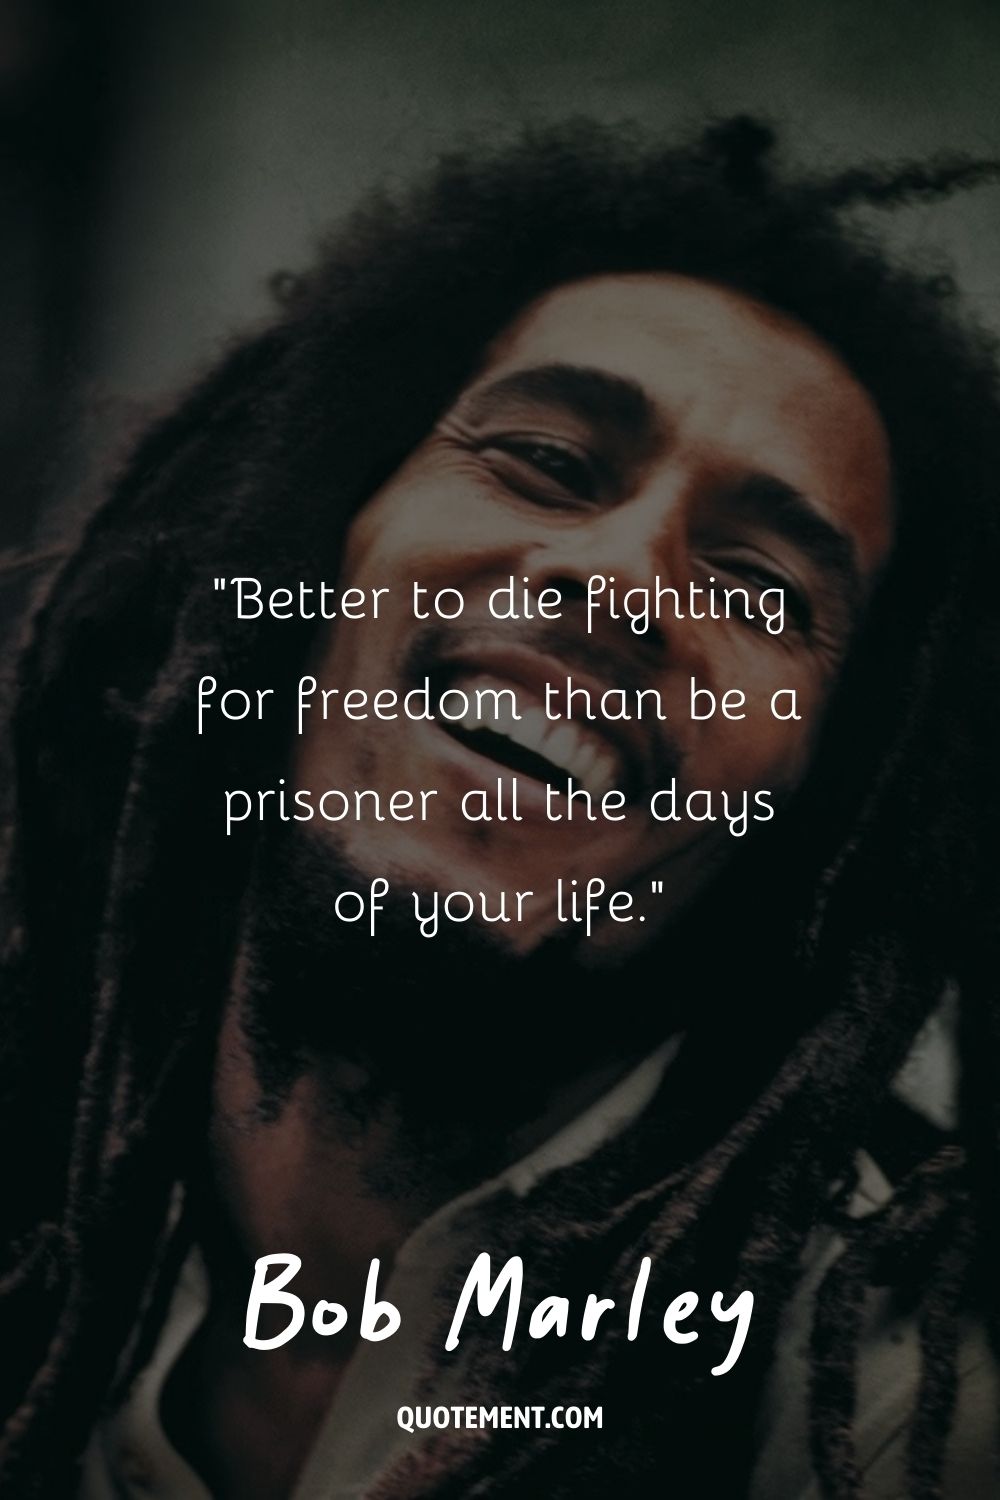 Bob Marley smiling, tilting his head backward representing the best Bob Marley quote
